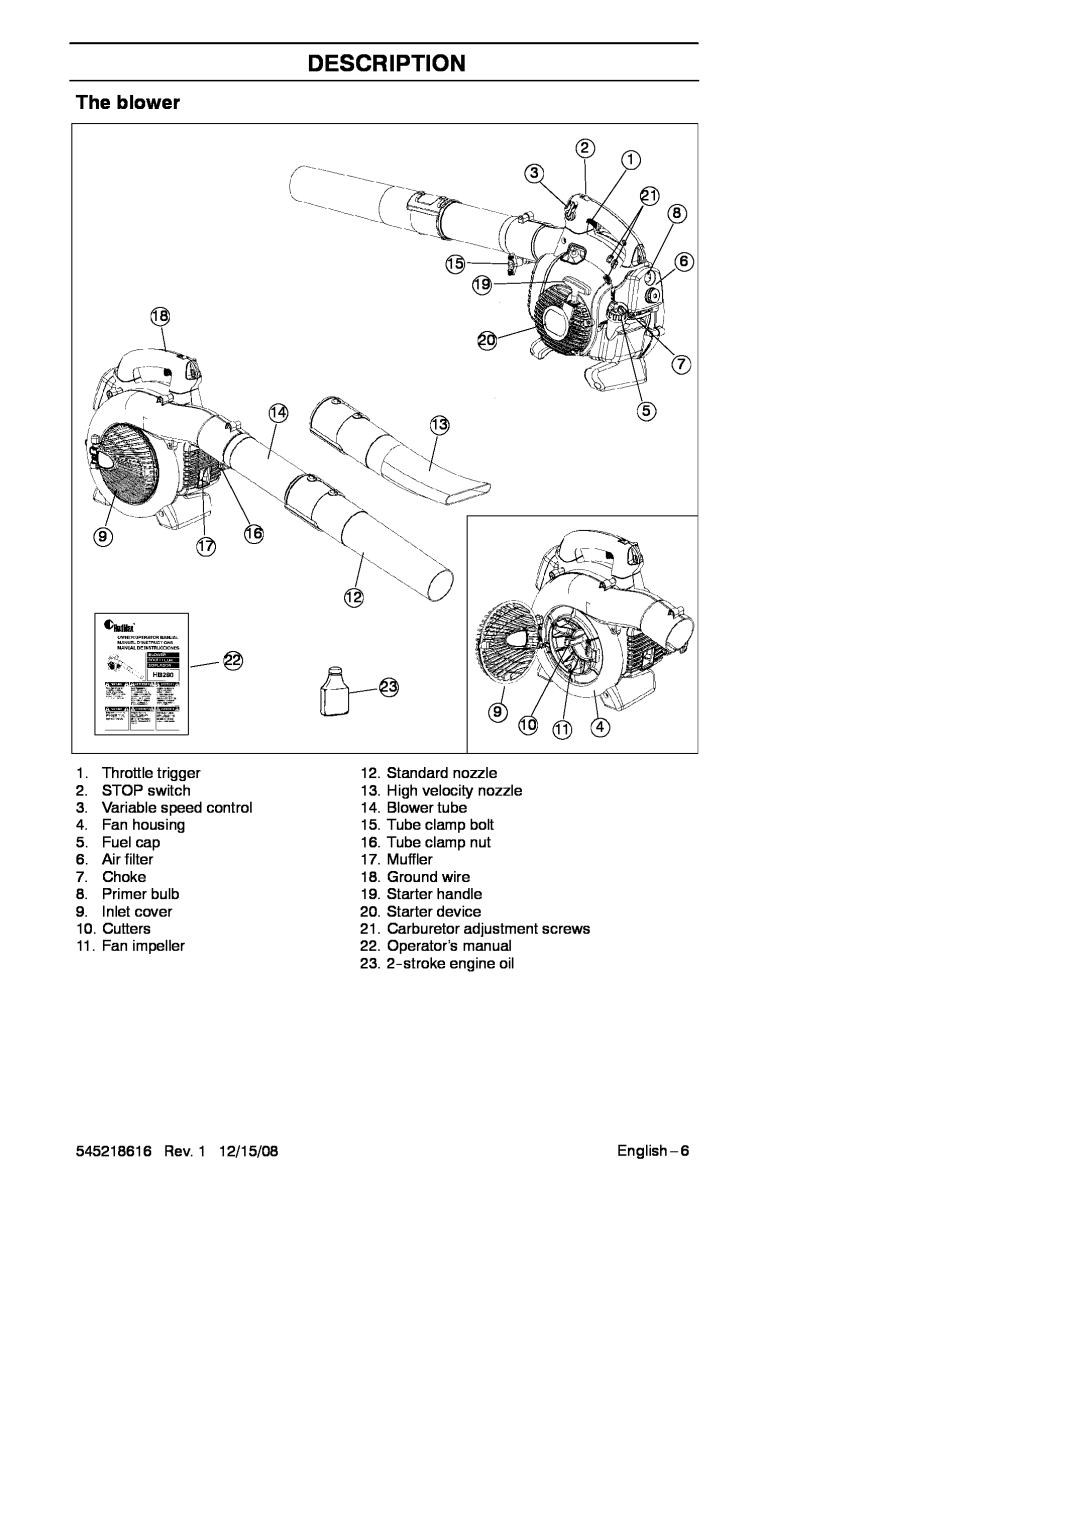 RedMax HB280 manual Description, The blower 